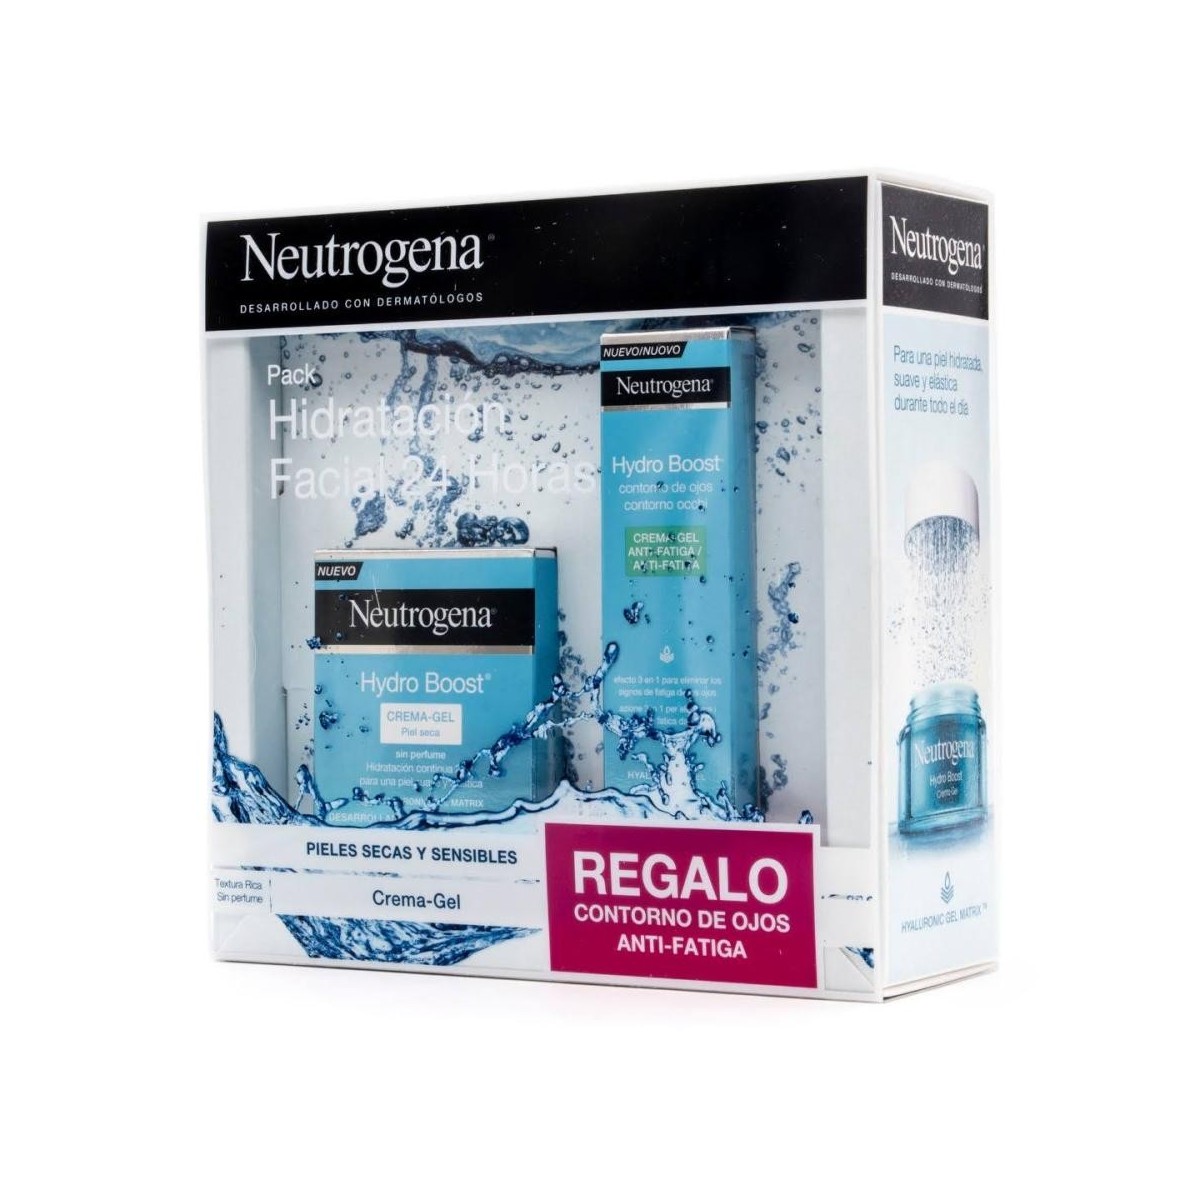 neutrogena pack hydro boost crema gel